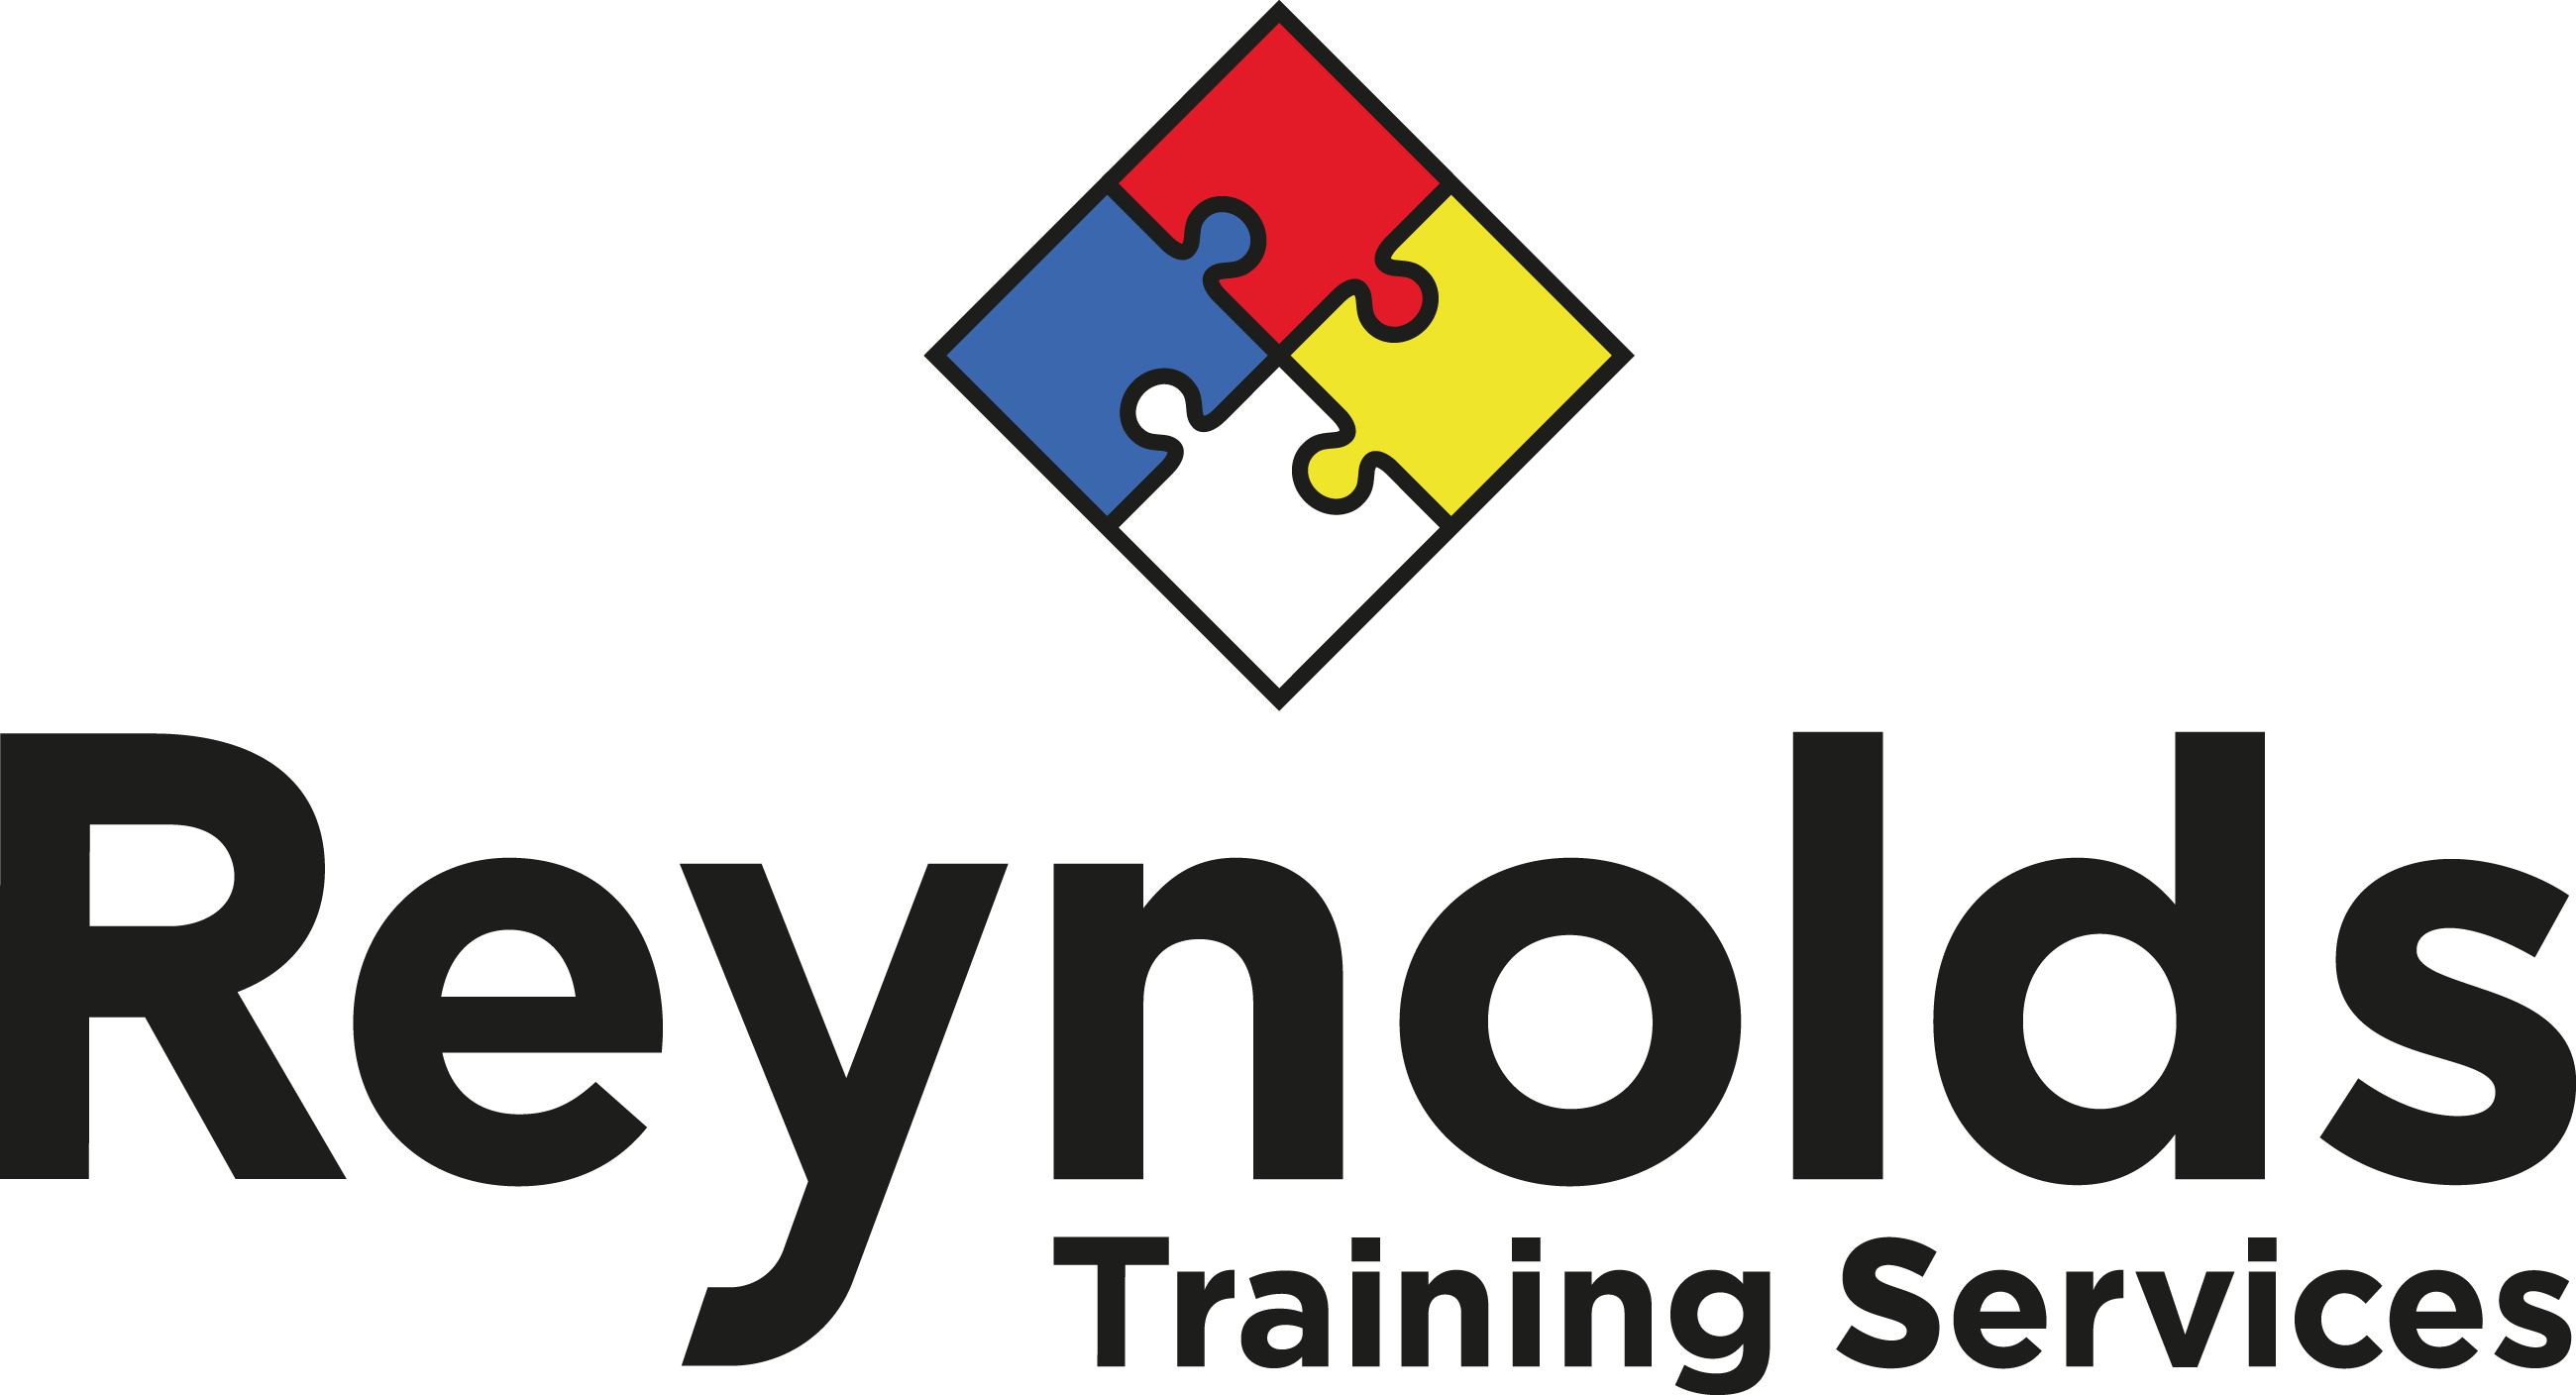 Reynolds Training